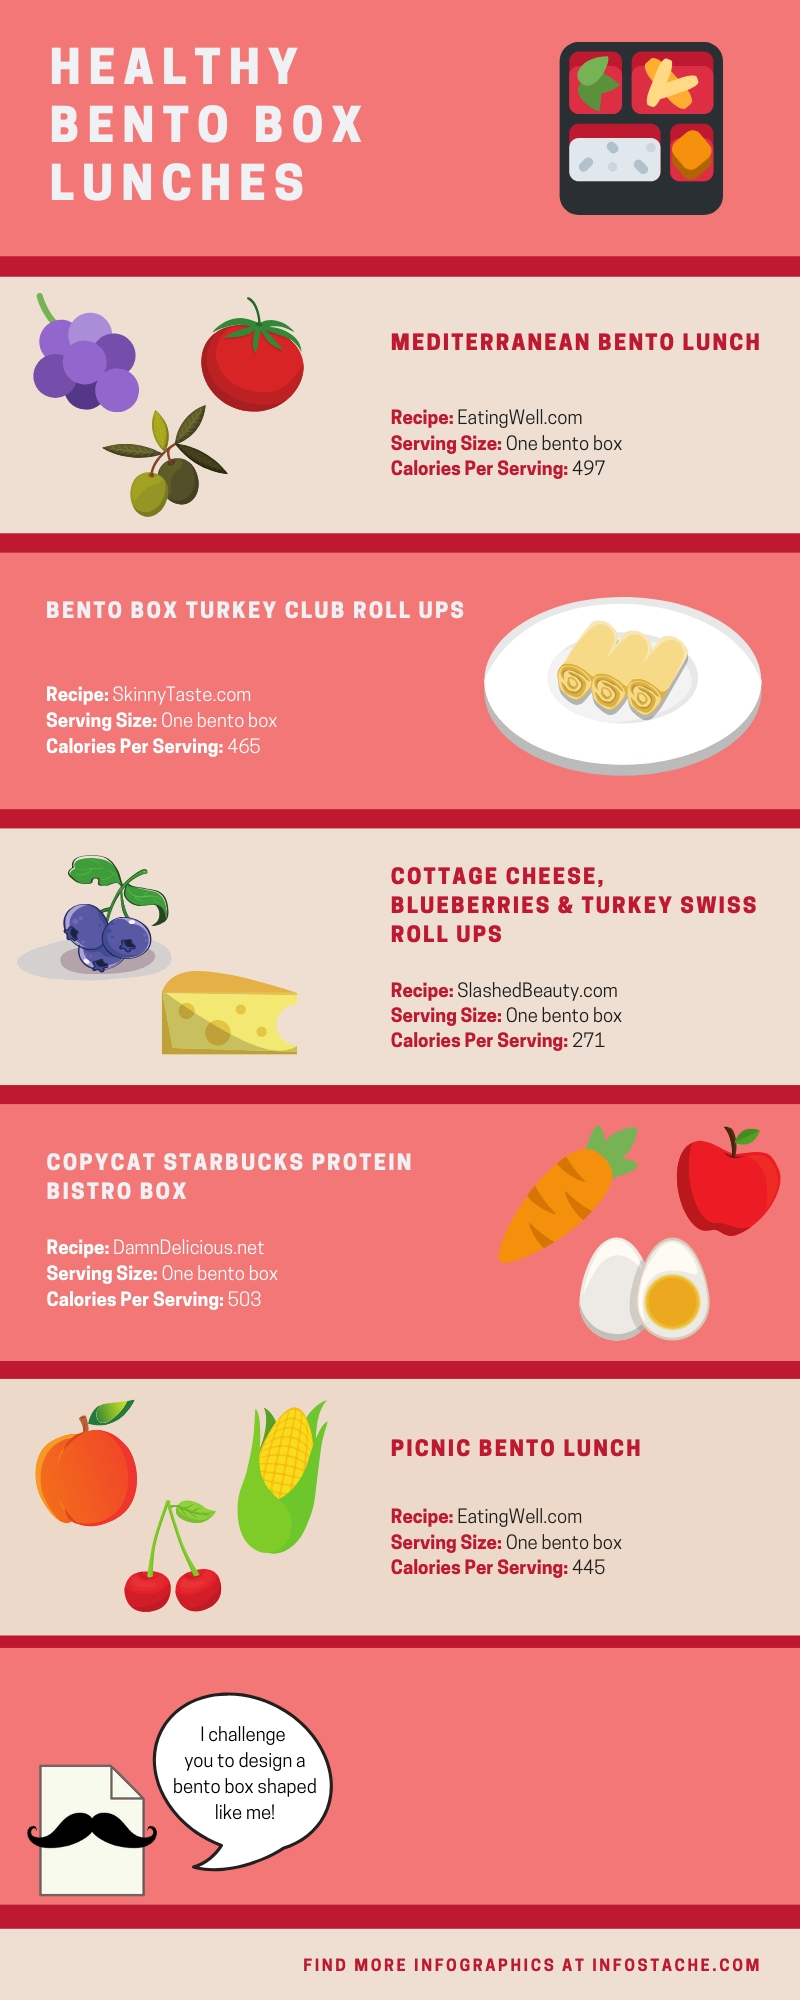 Bento Box Turkey Club Roll Ups - Skinnytaste